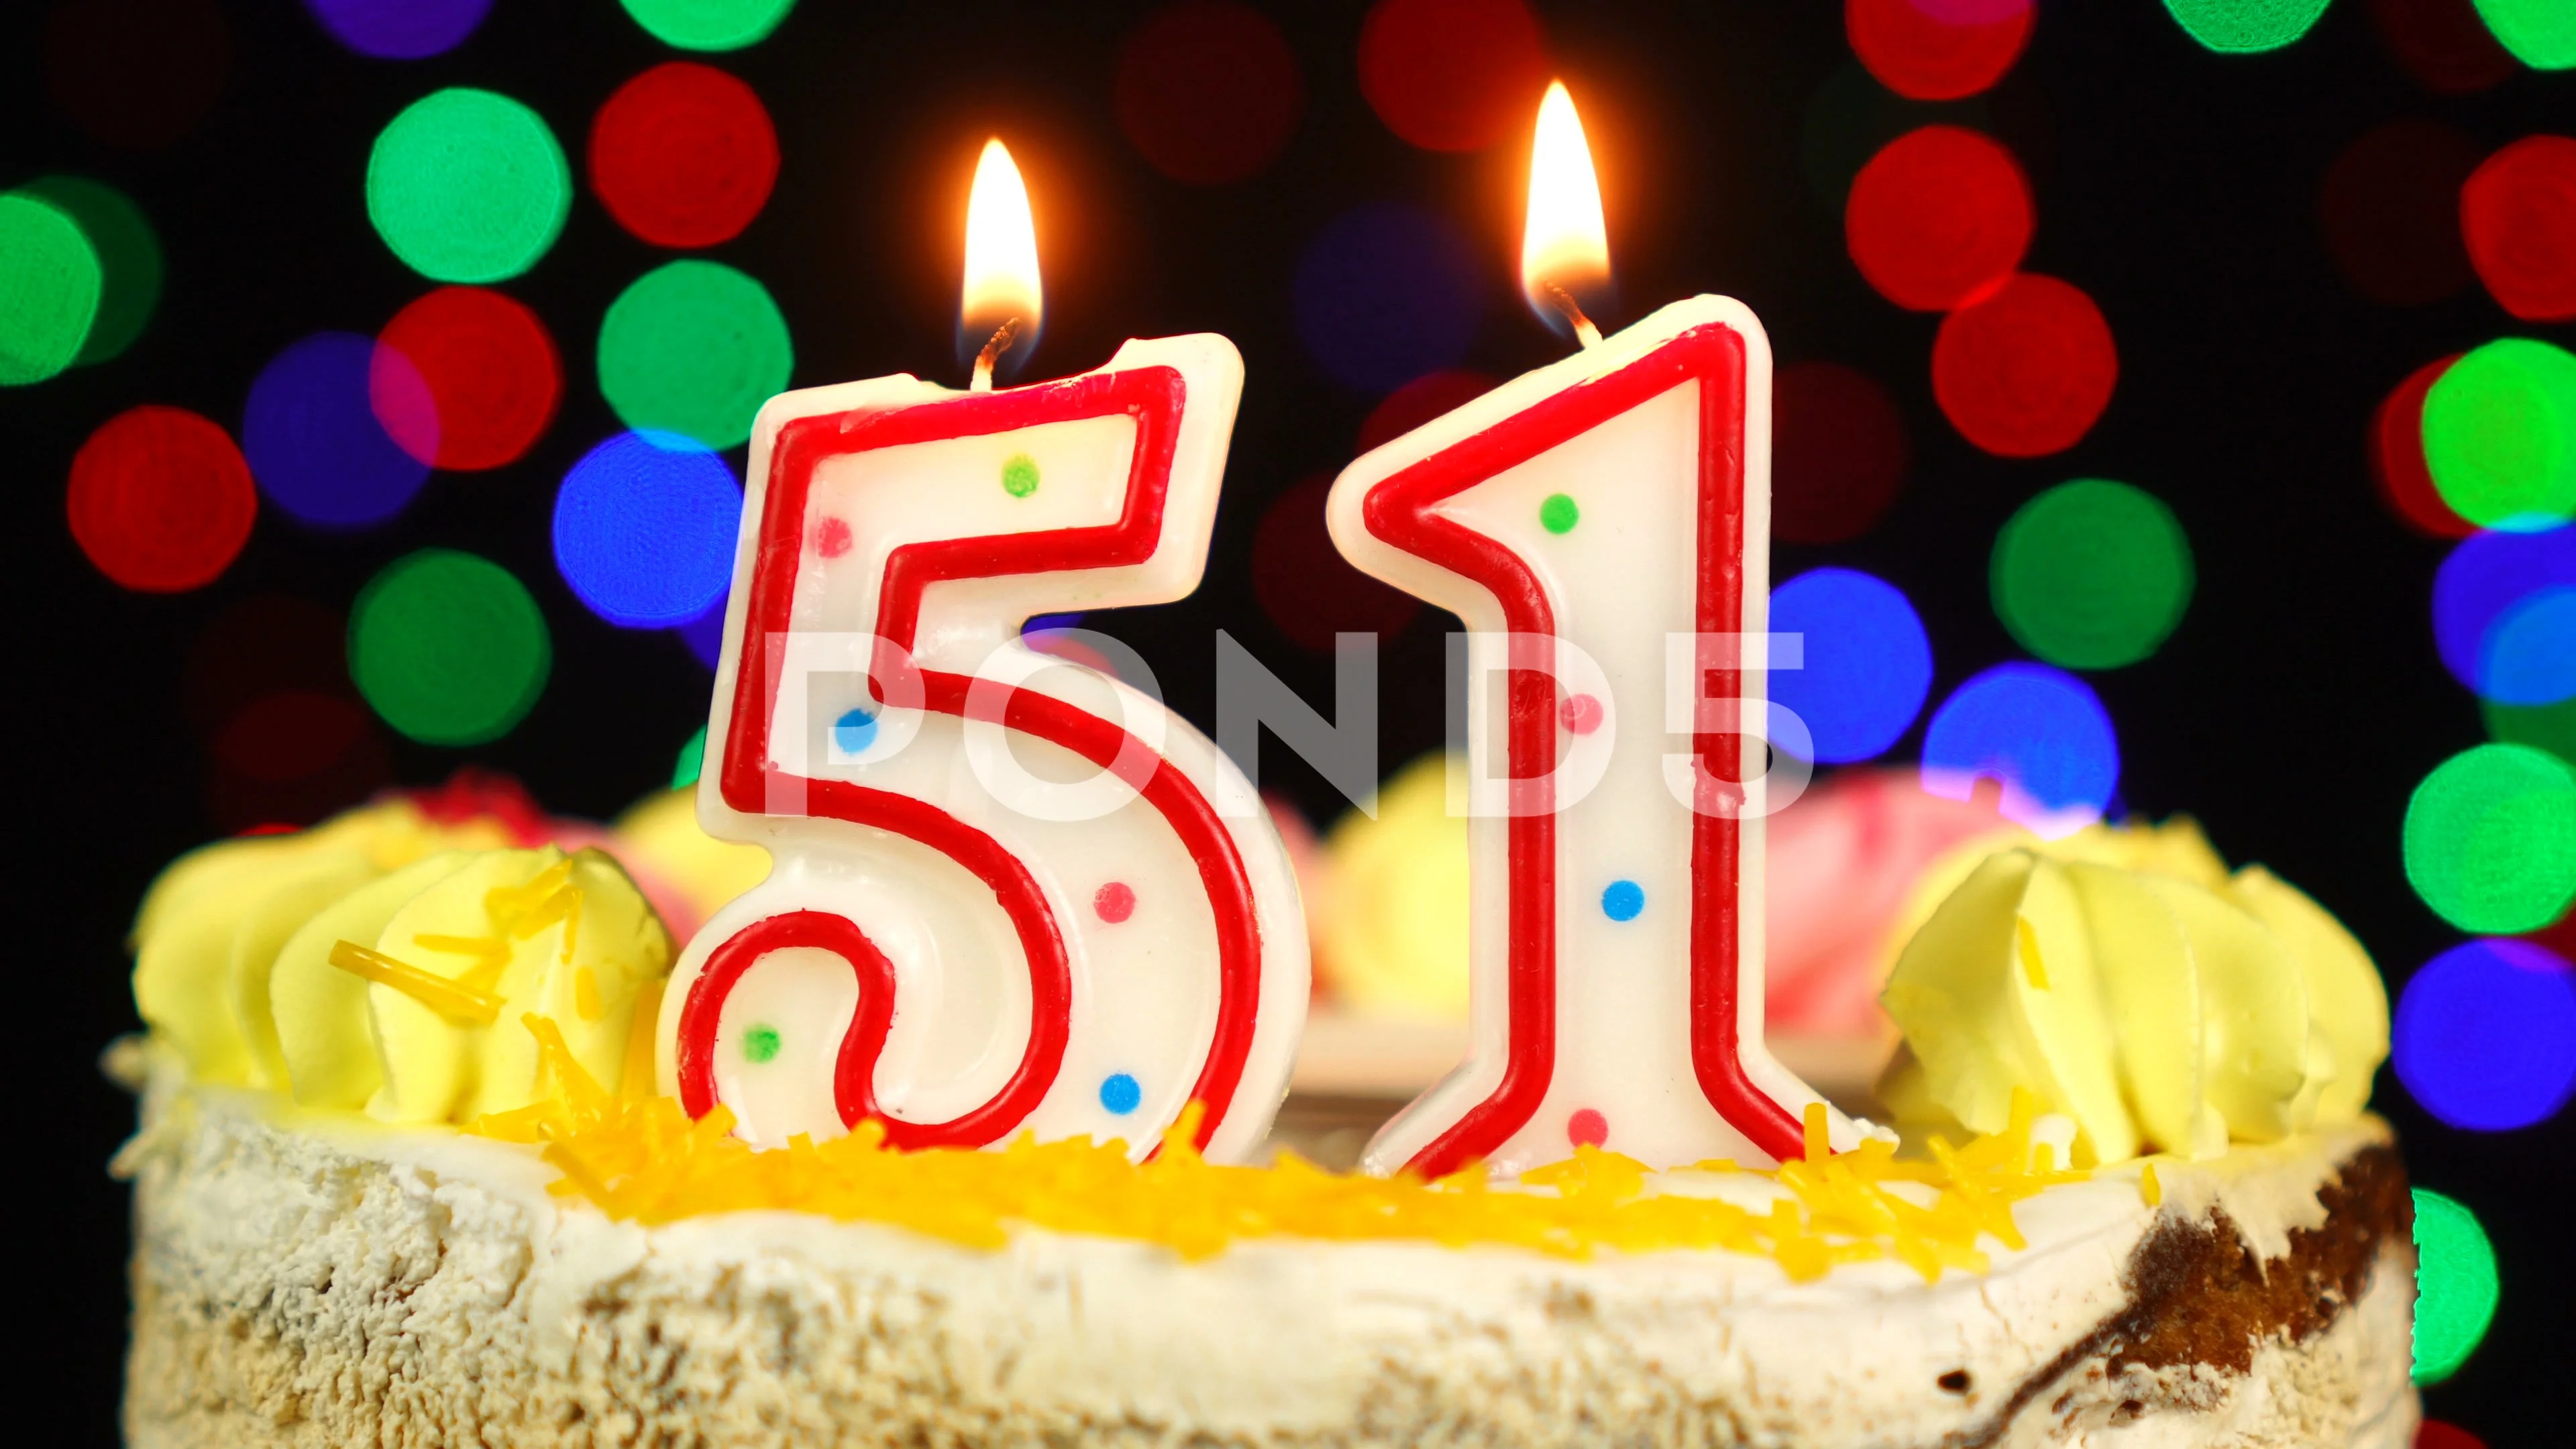 Update 76+ 51st birthday cake ideas latest - awesomeenglish.edu.vn